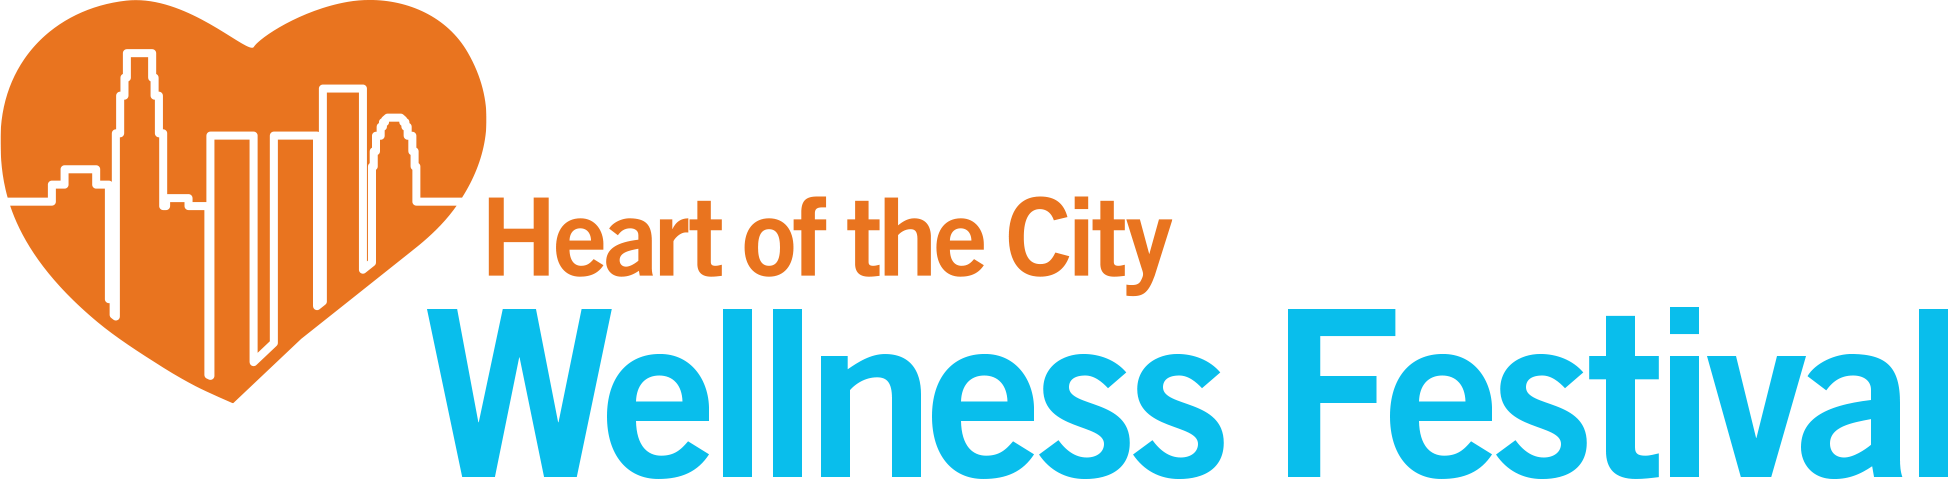 Heart of the City Wellness Festival logo